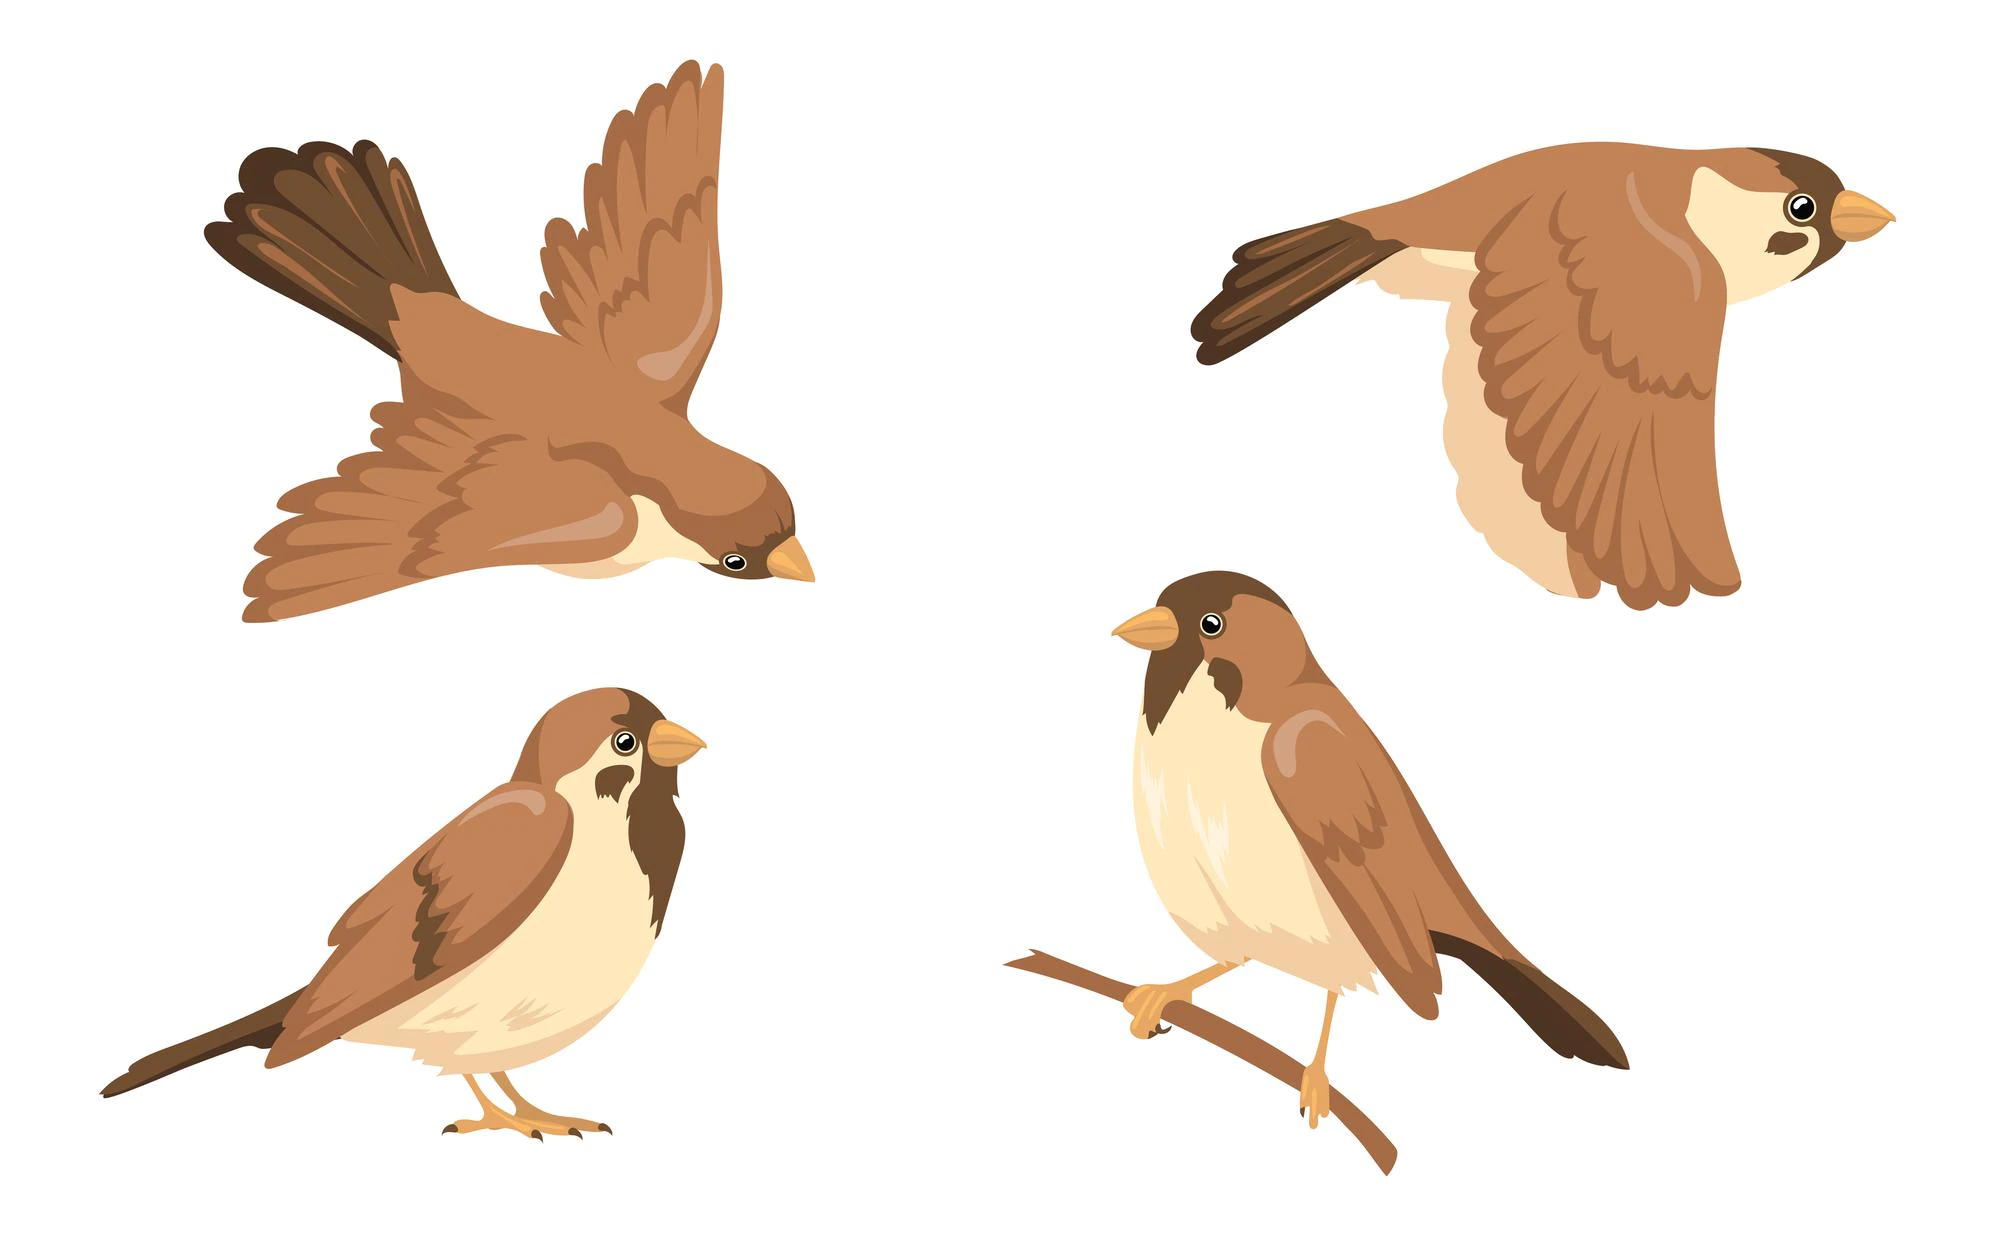 sparrow character illustrations set 74855 17867